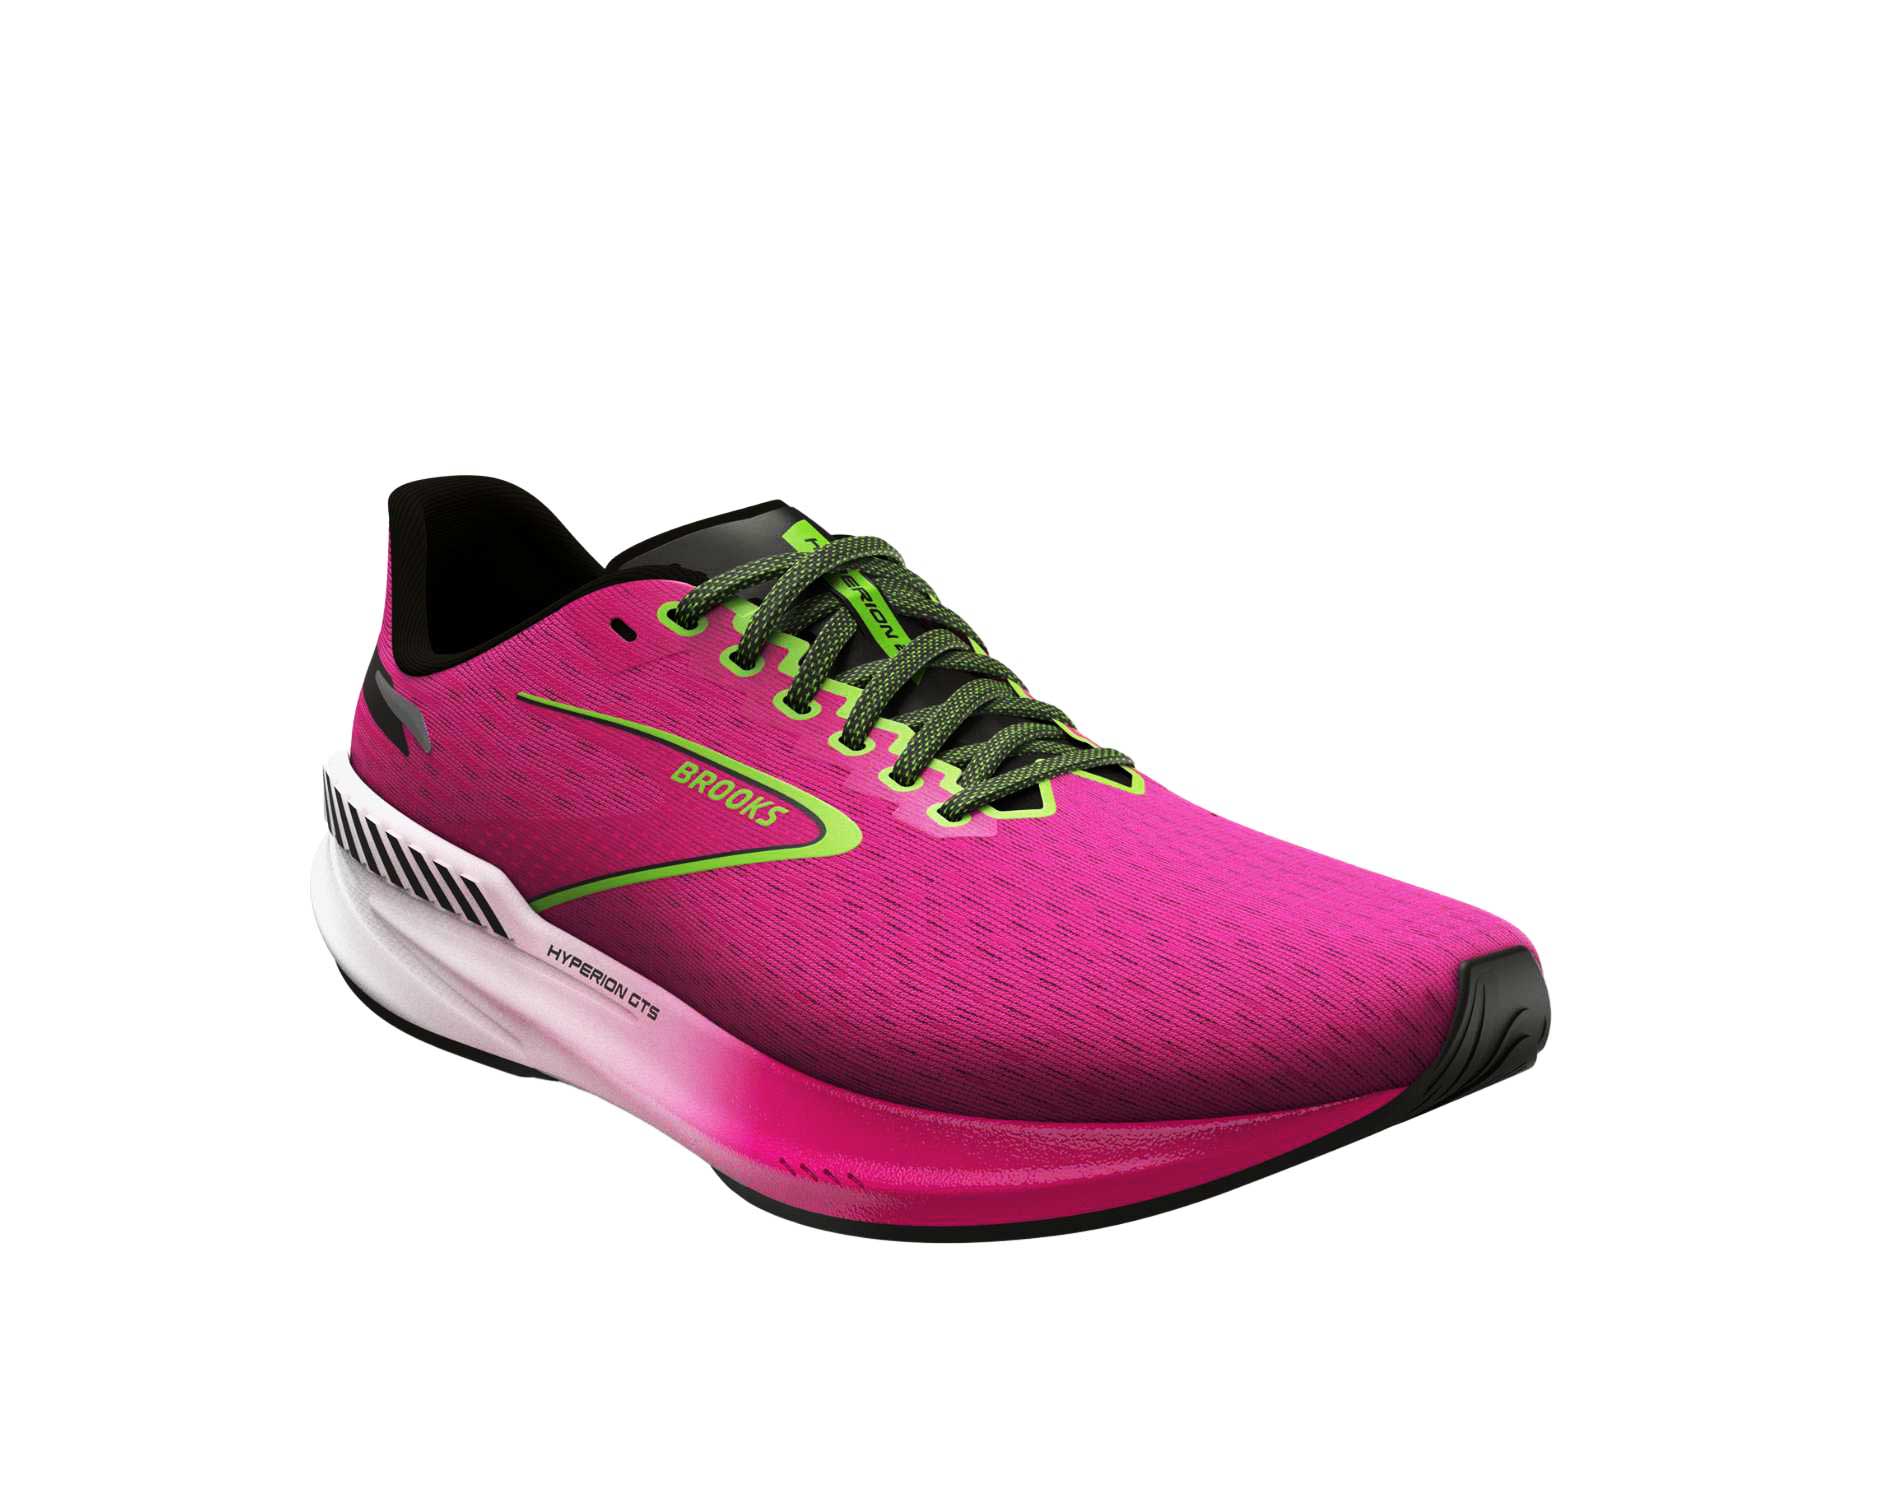 Brooks Hyperion gts b standard shoe for women in pink glo green black